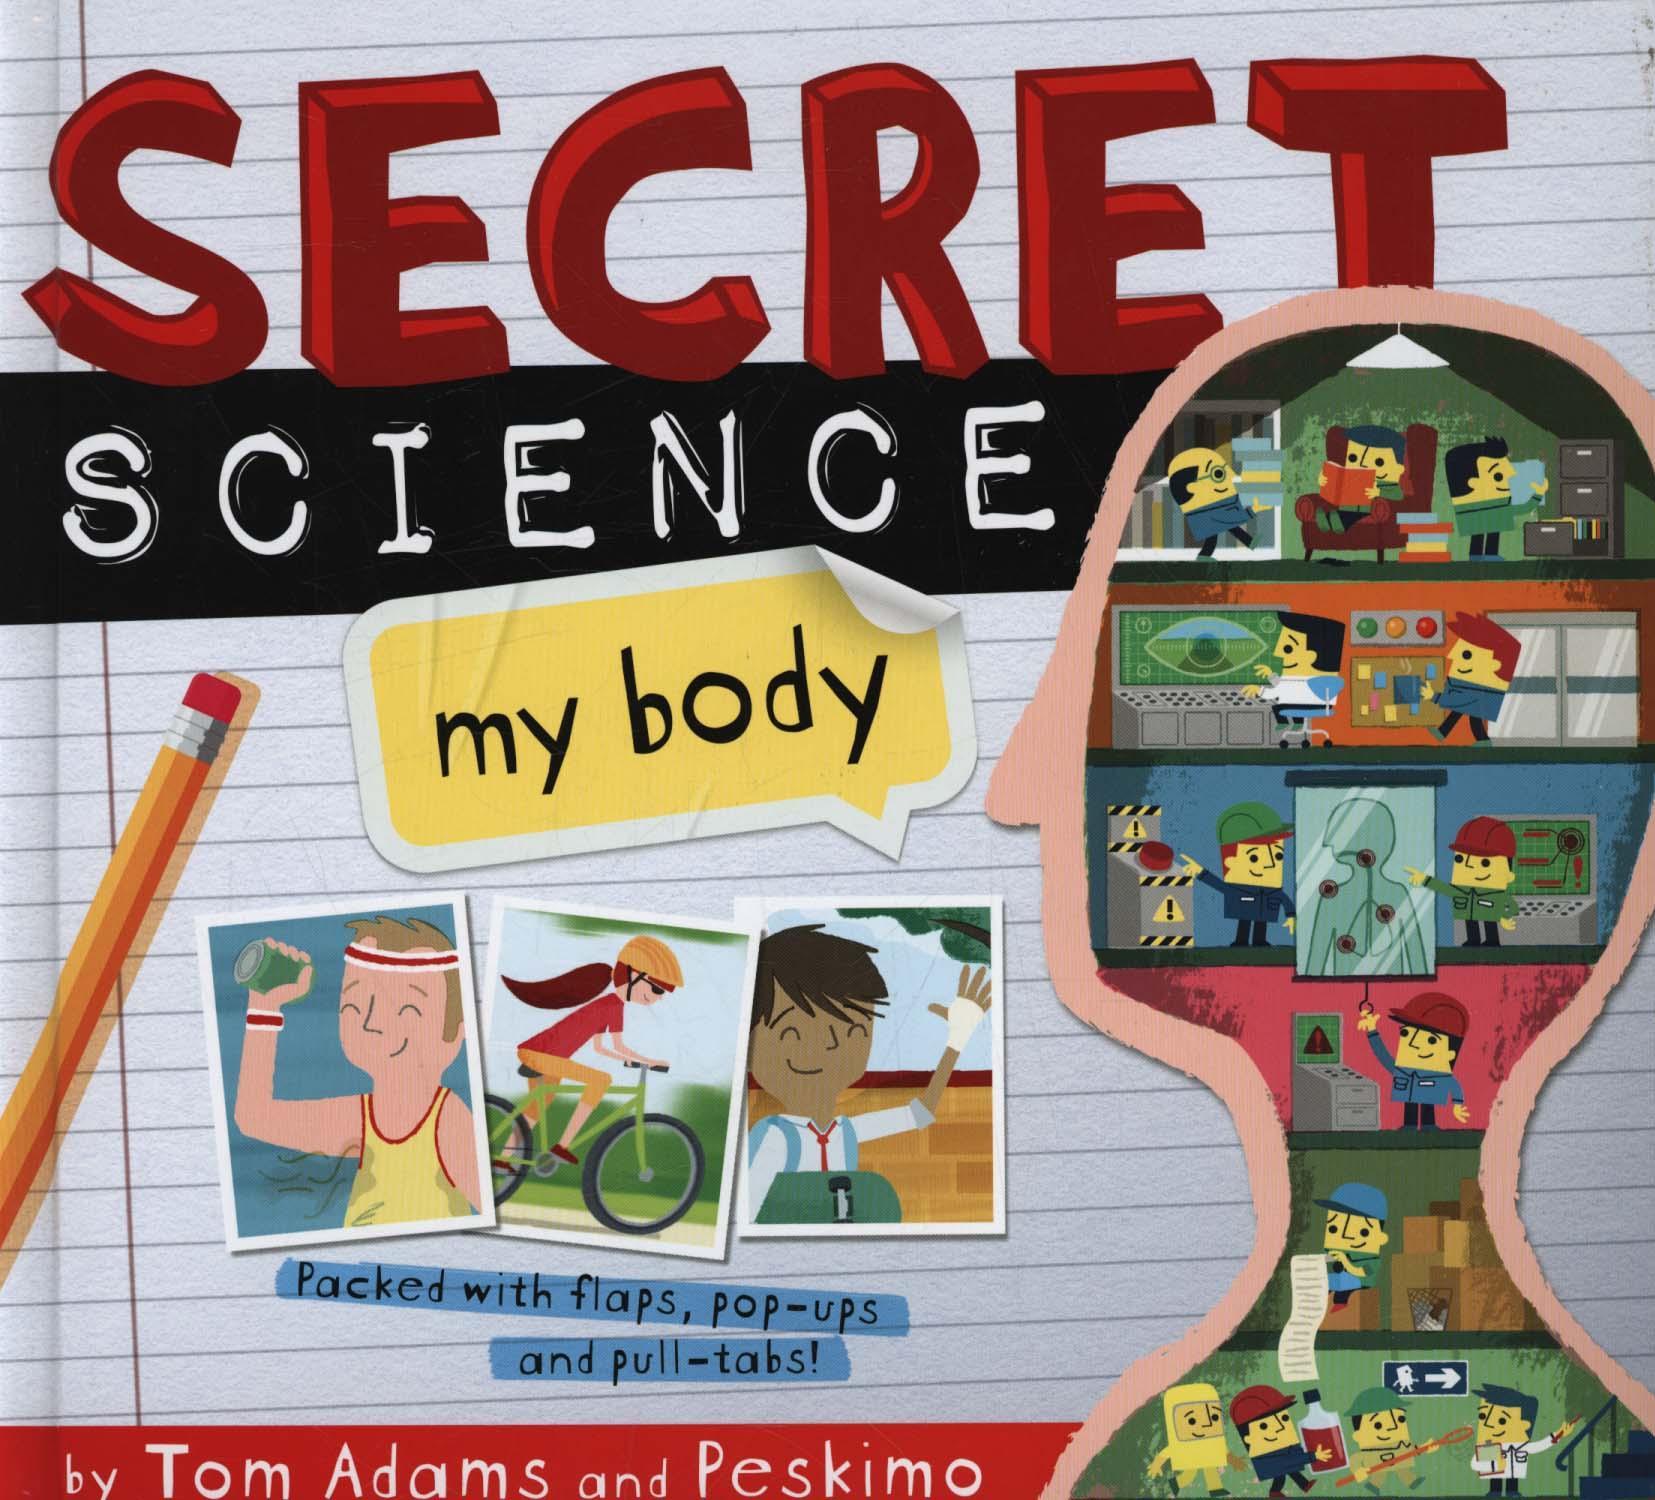 Secret Science: My Body